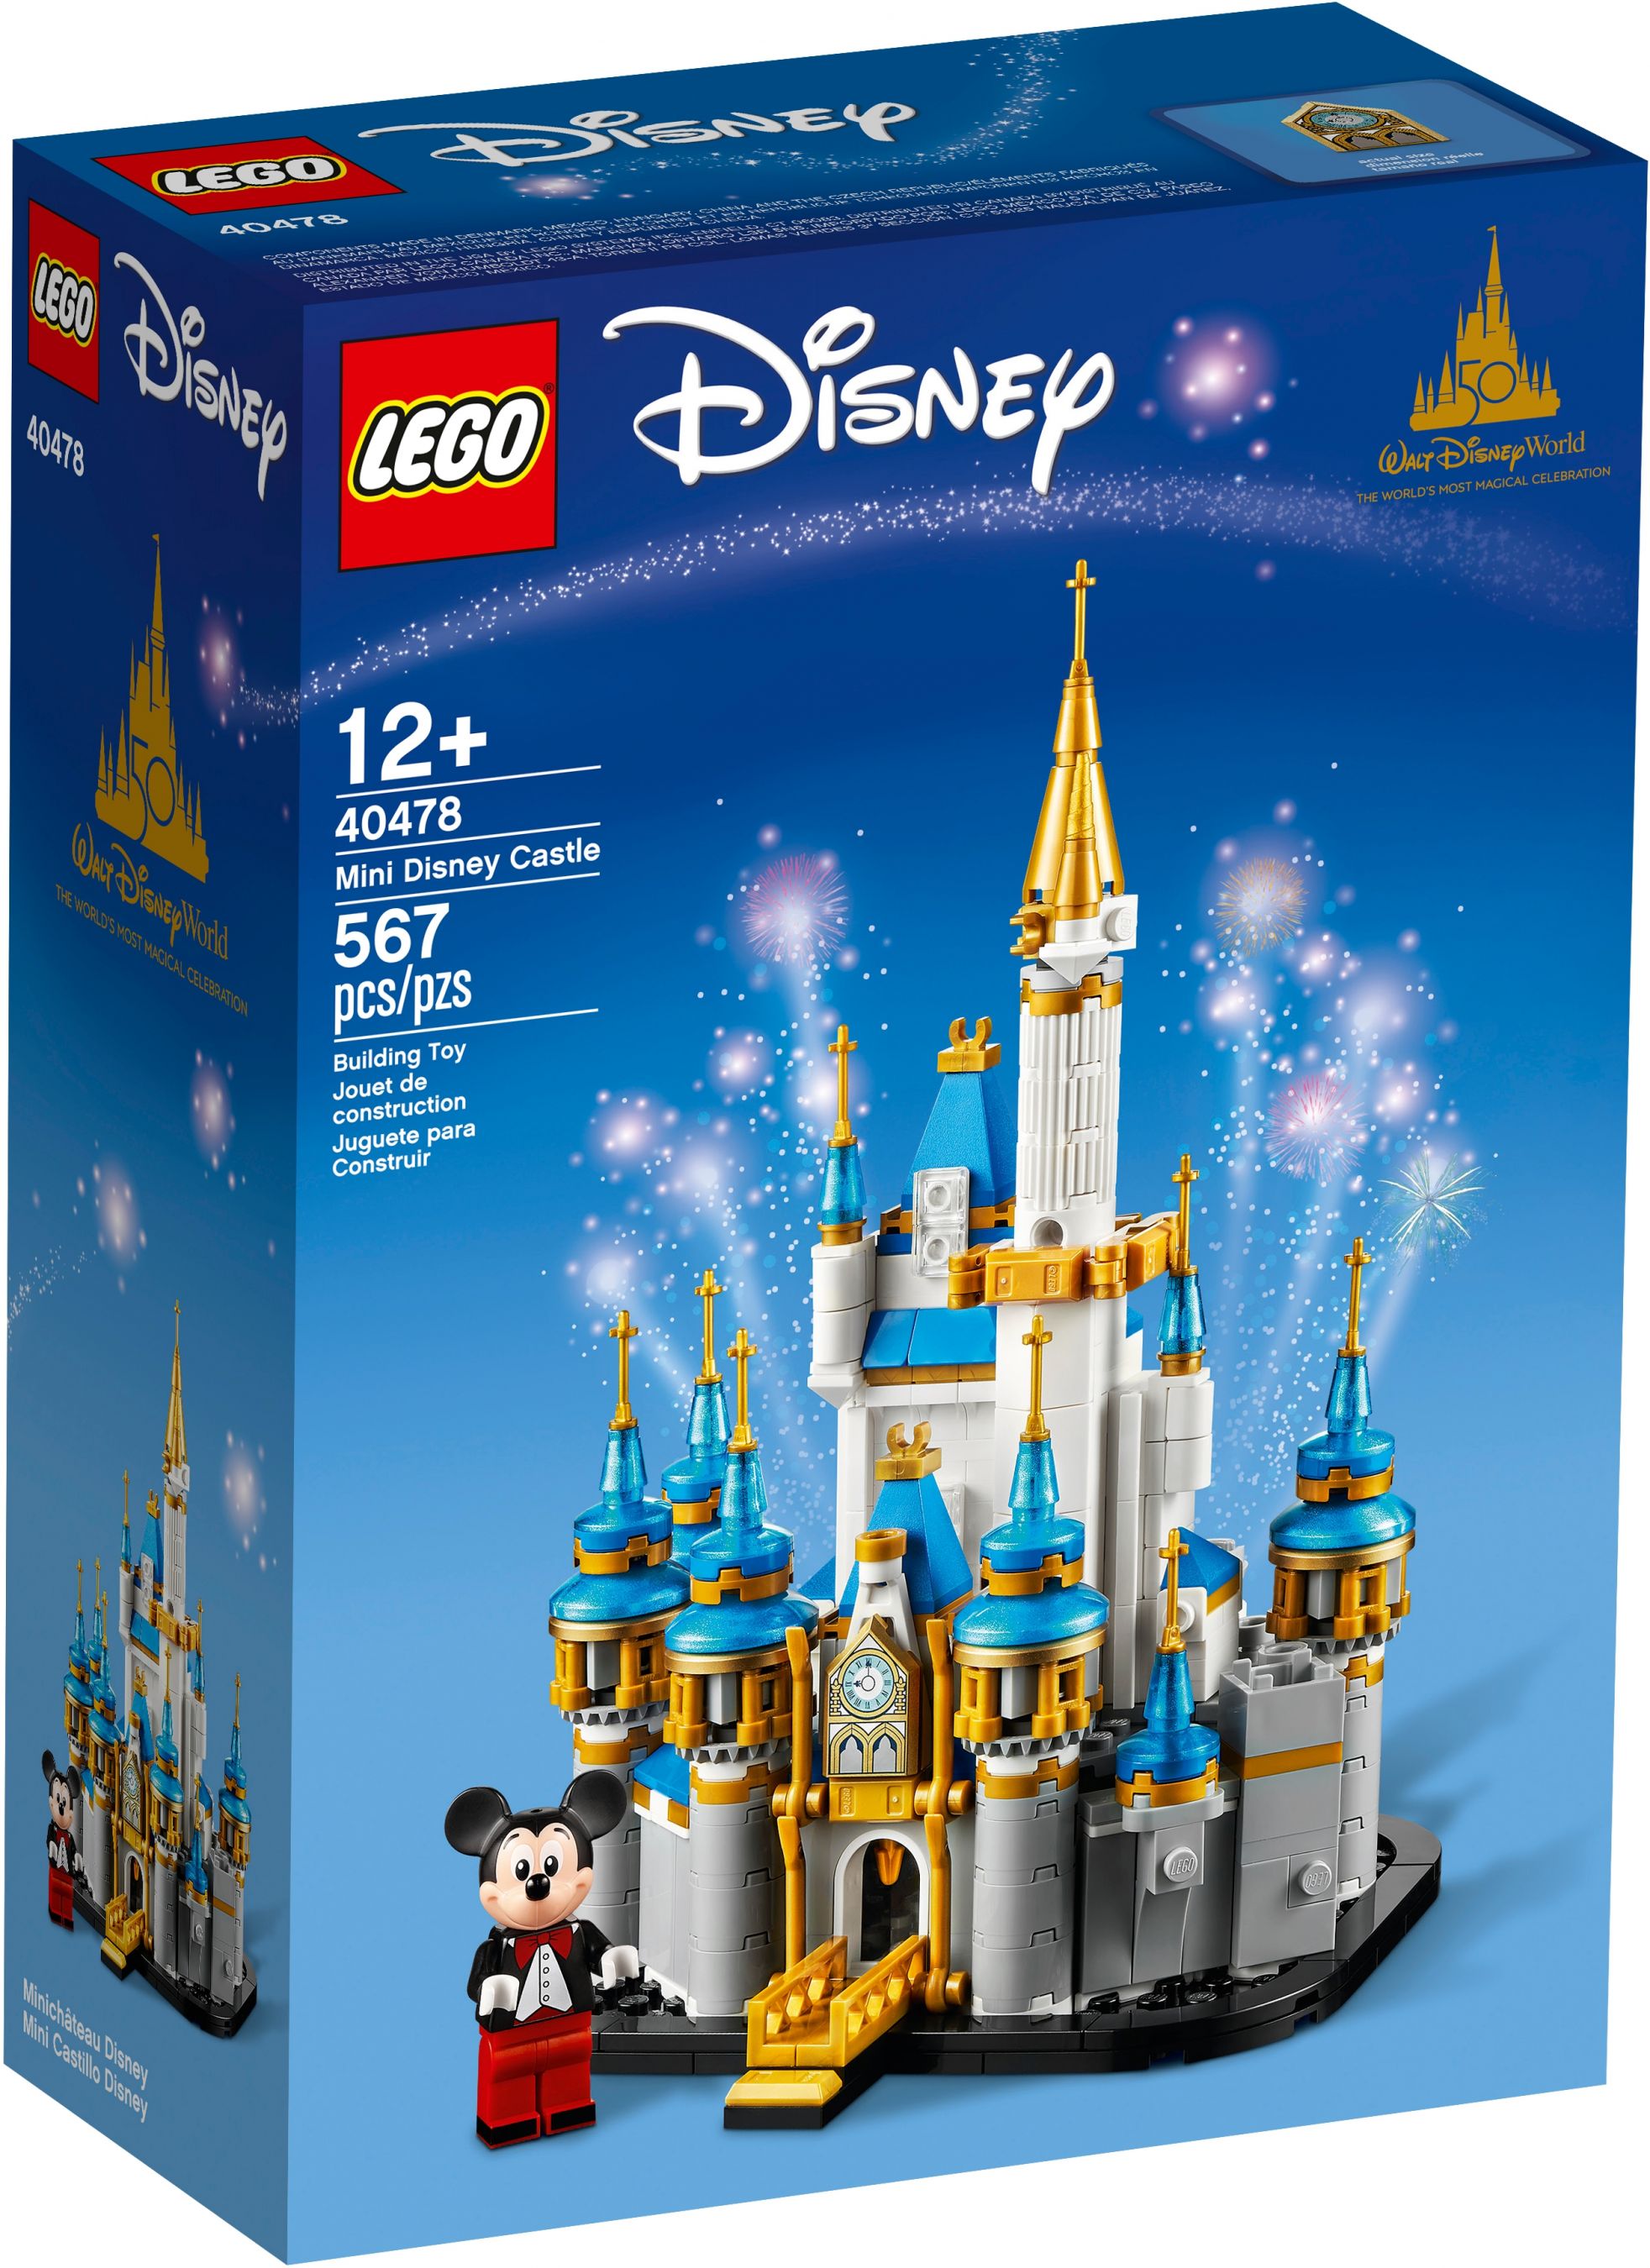 LEGO Miscellaneous 40478 Kleines Disney Schloss LEGO_40478_alt1.jpg